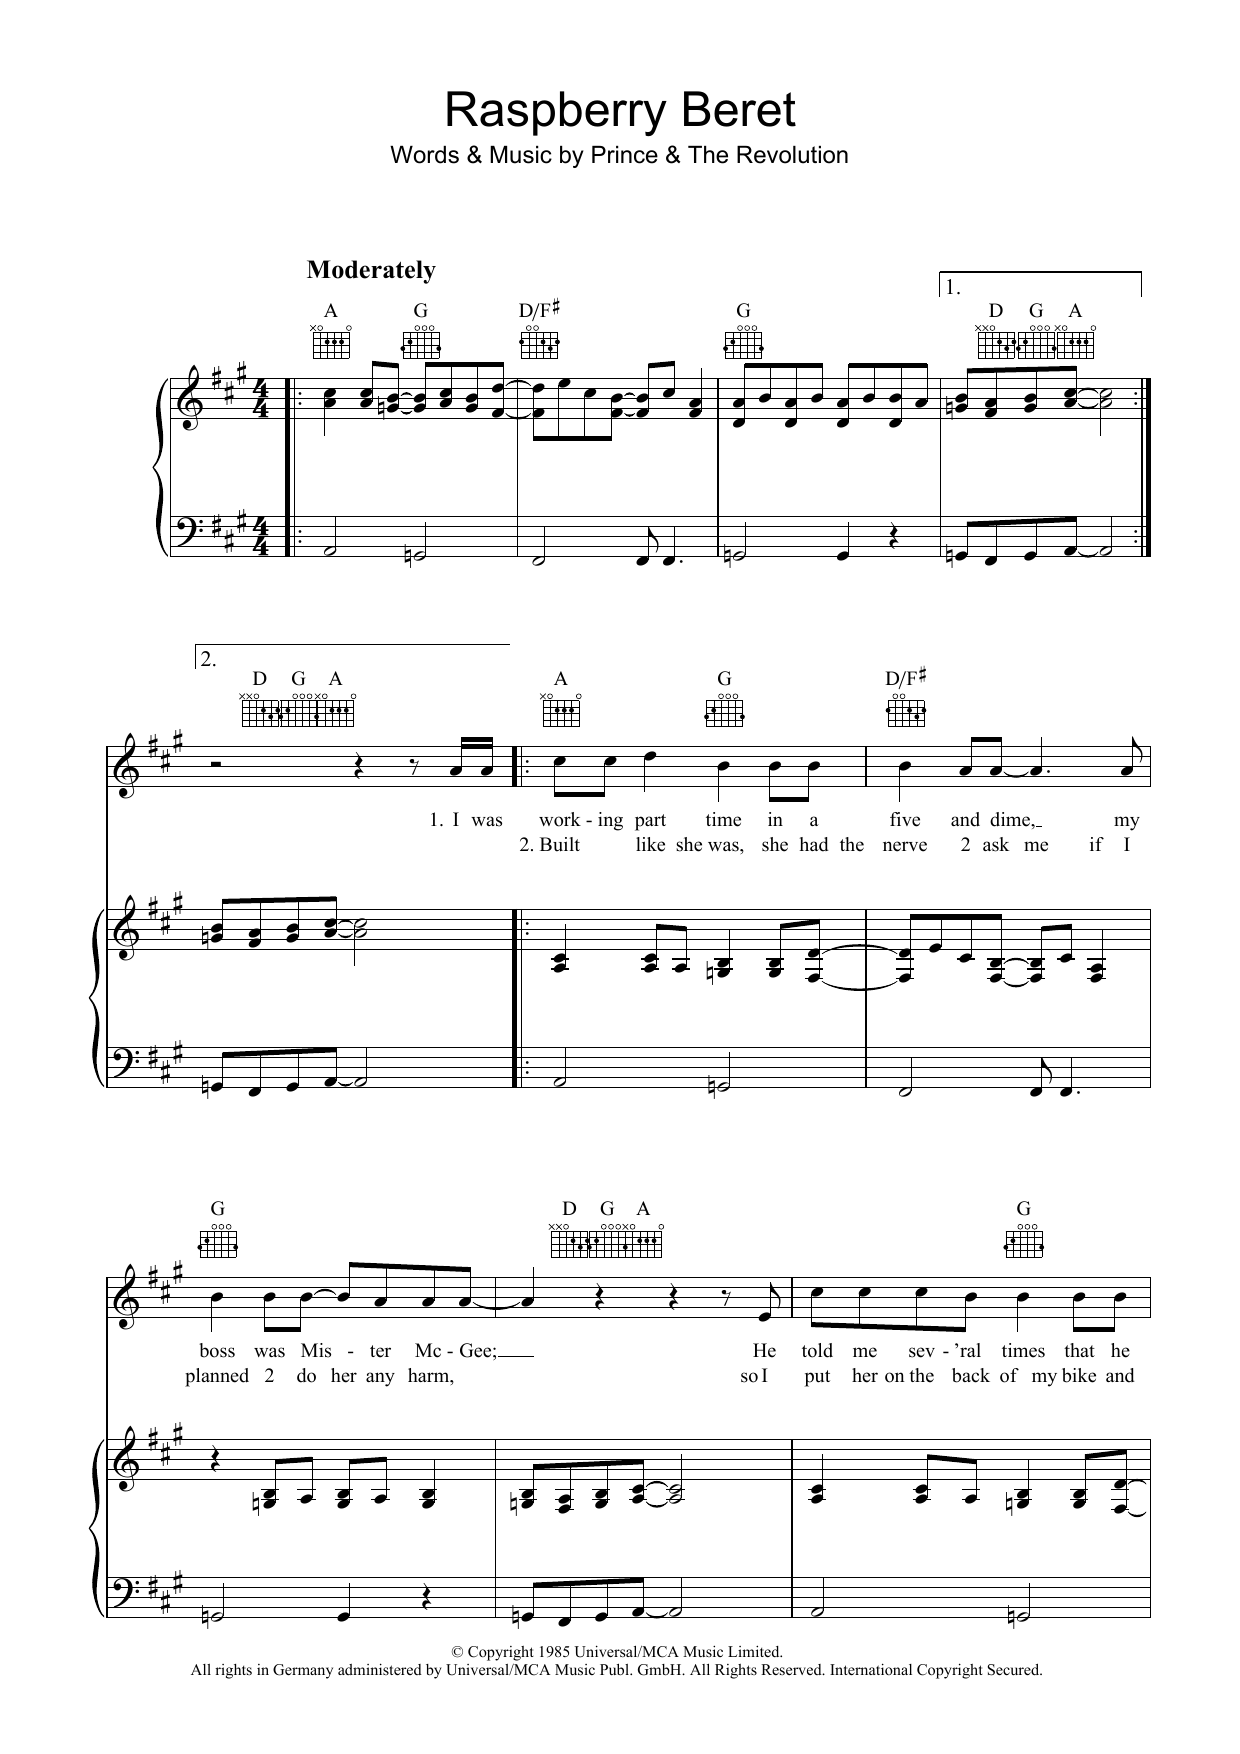 Prince Raspberry Beret Sheet Music Notes & Chords for Ukulele - Download or Print PDF